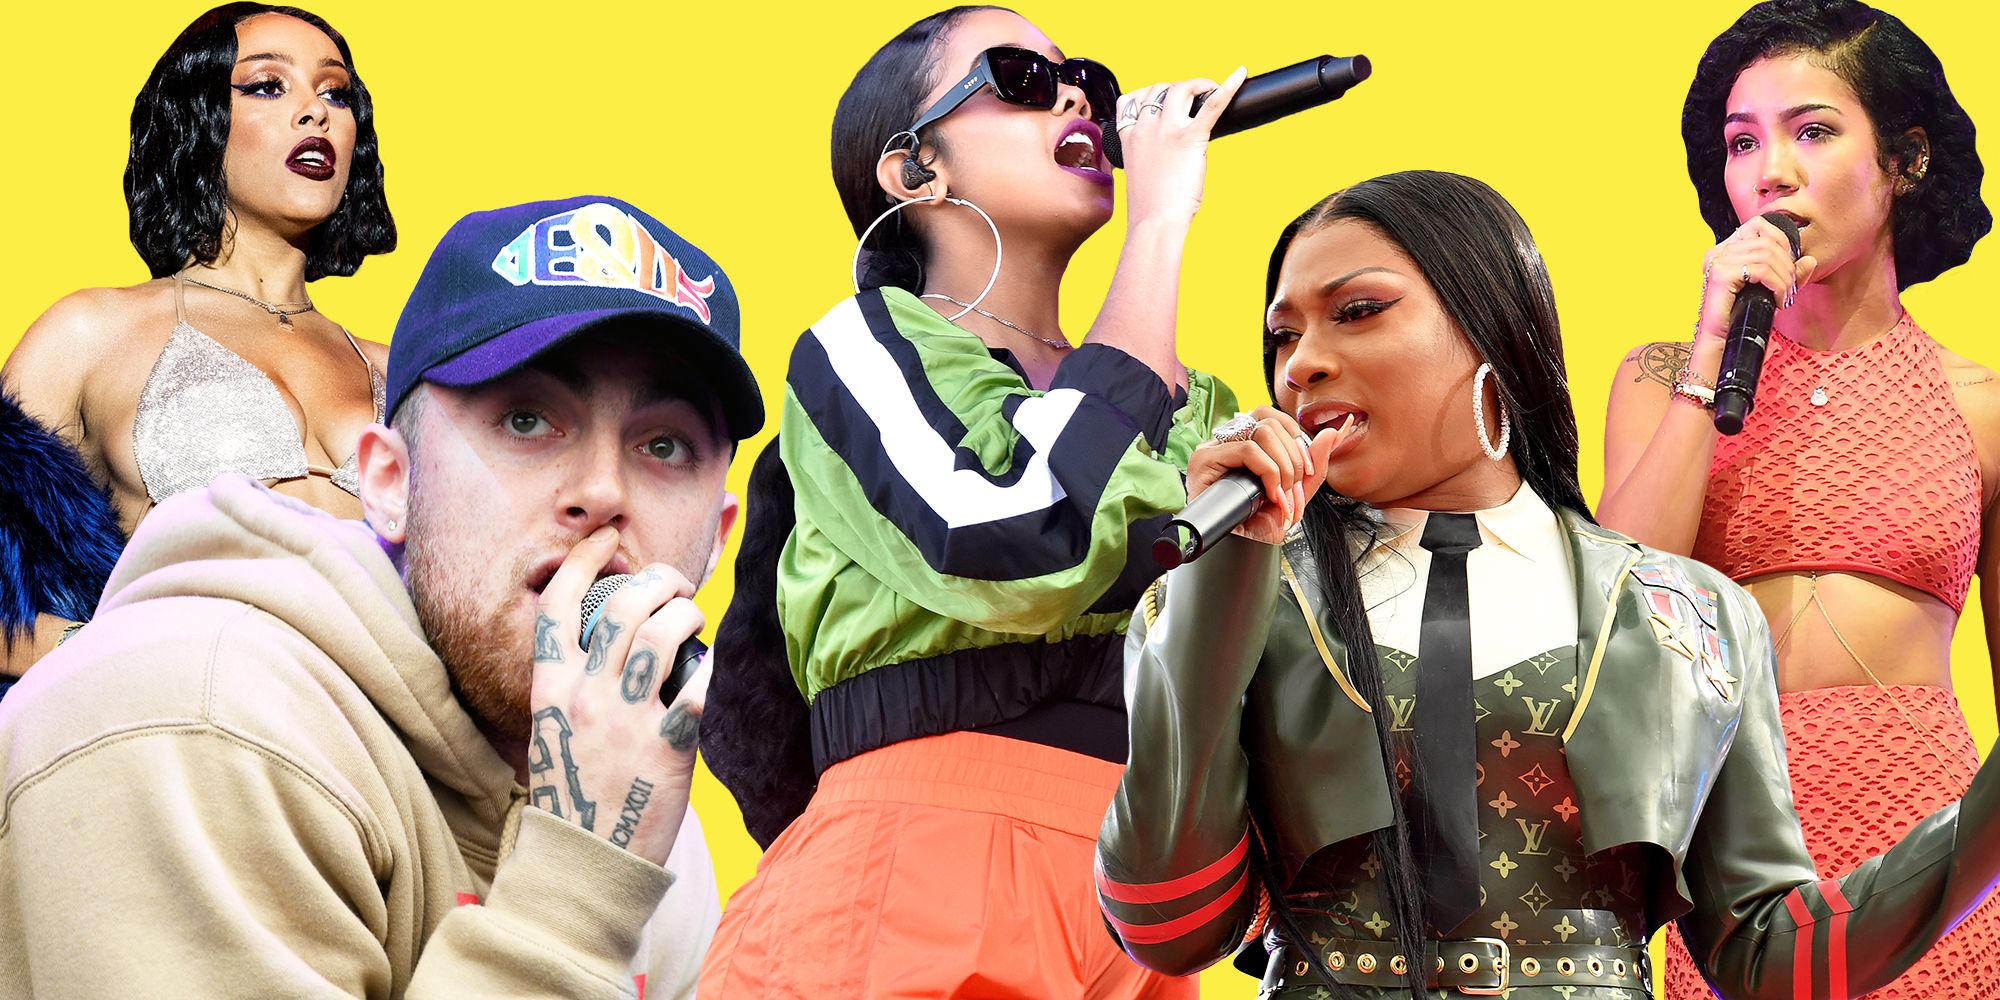 Top 10 New Best Songs of 2020